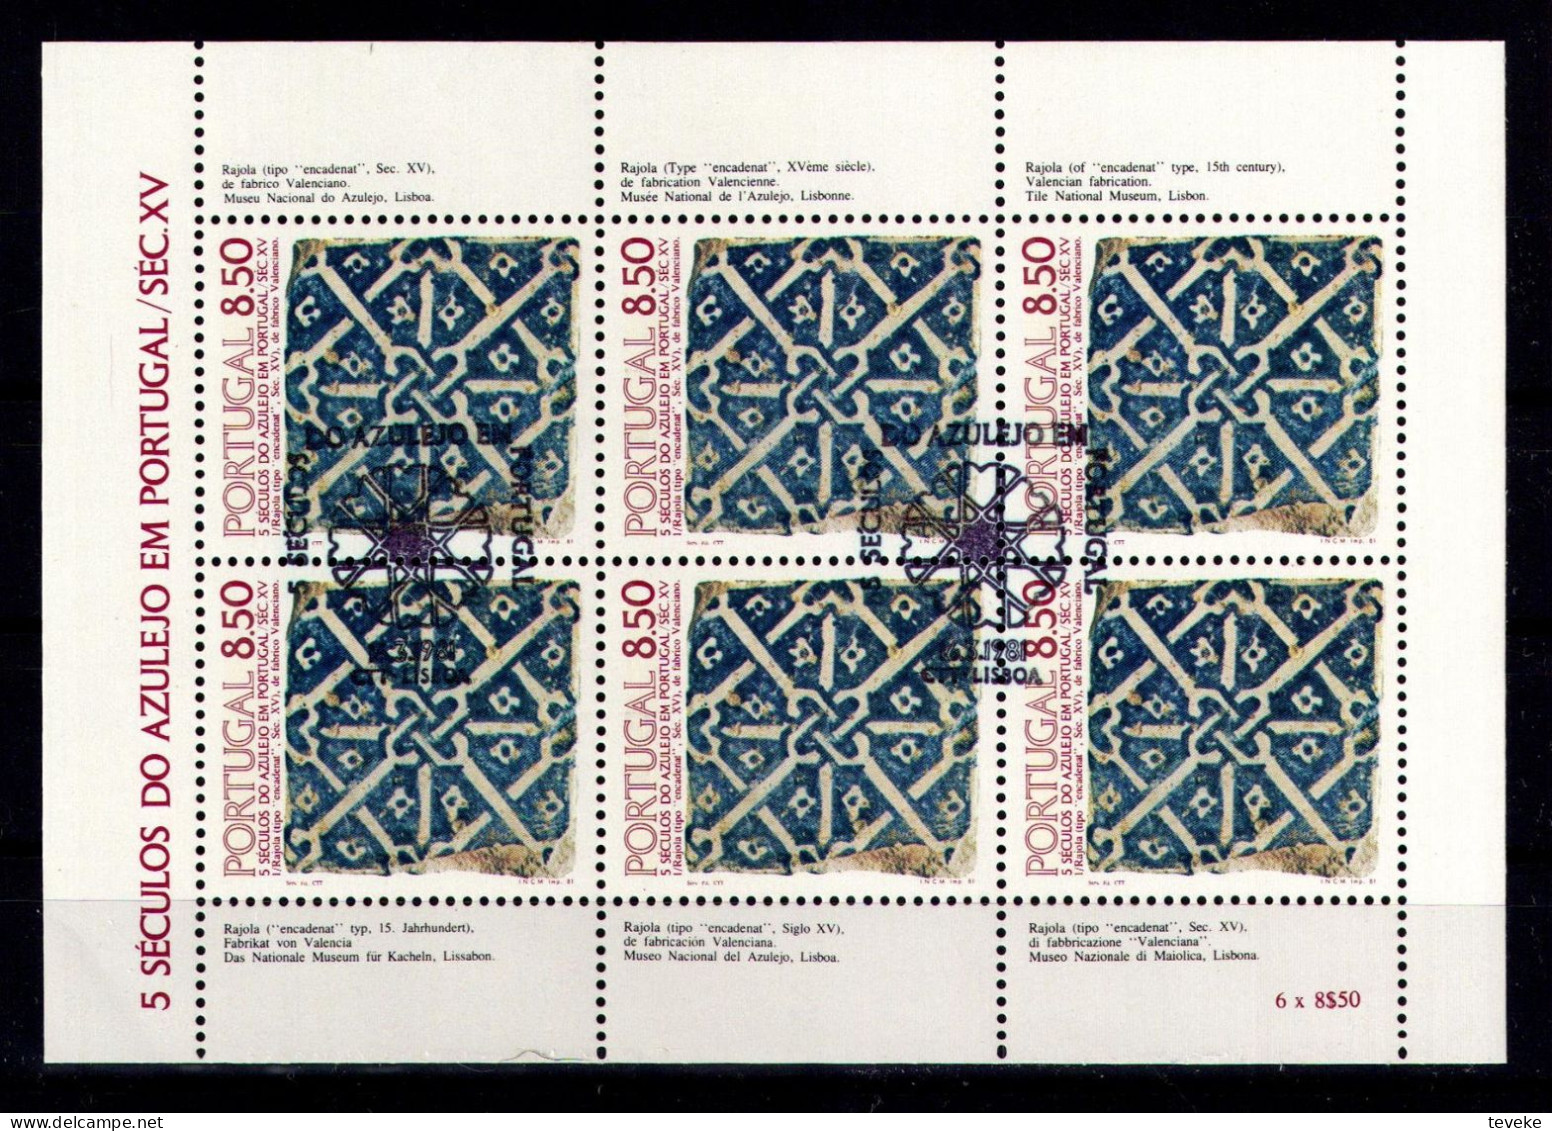 PORTUGAL 1981 - Michel Nr. 1528 KB - USED/ʘ - Azulejos - Usado